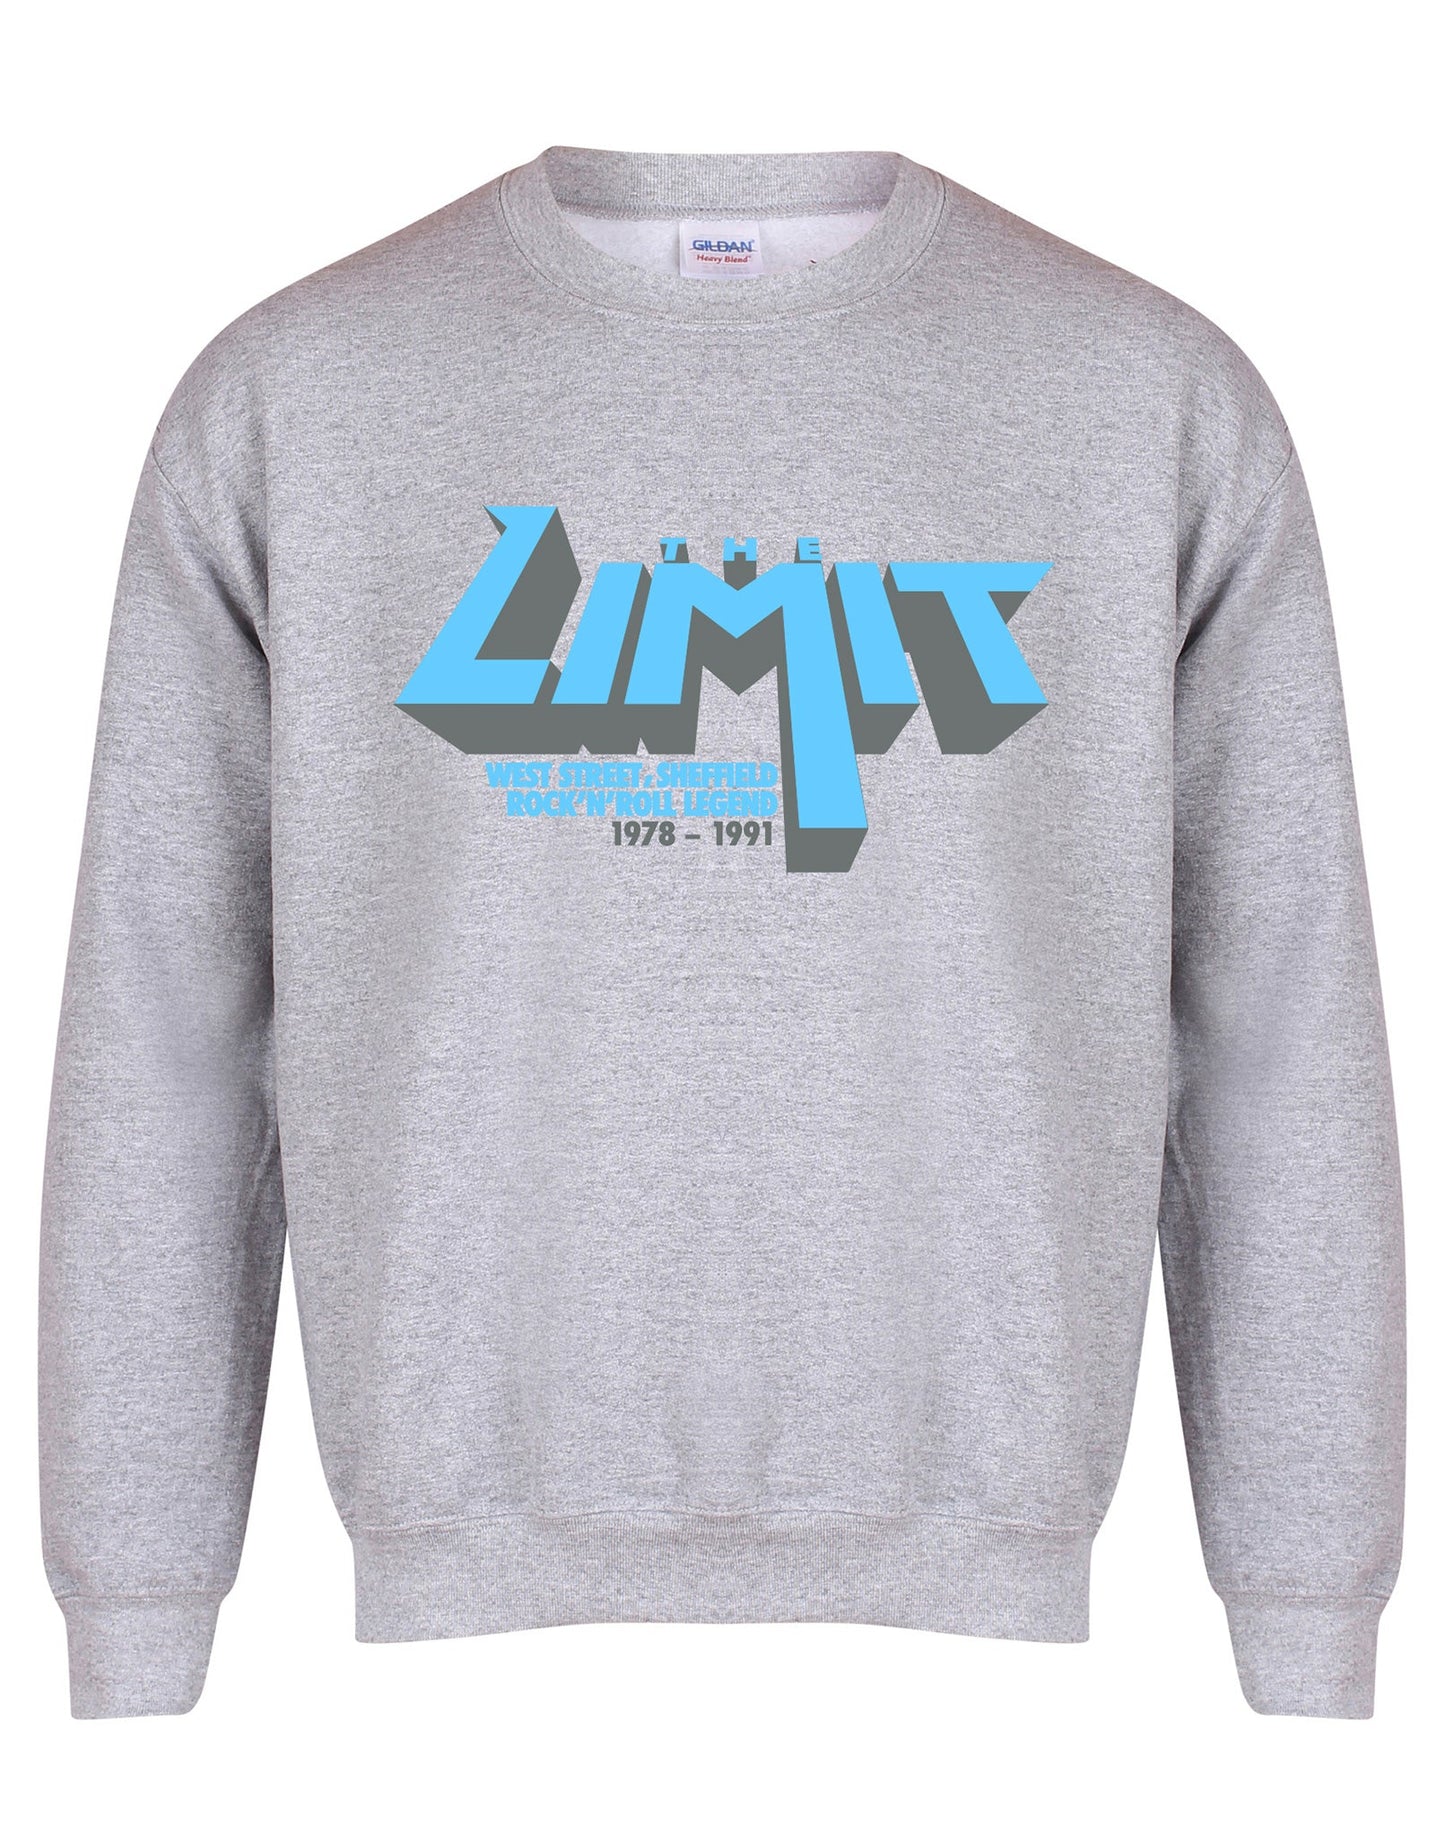 Limit anniversary (blue logo) unisex fit sweatshirt - various colours - Dirty Stop Outs